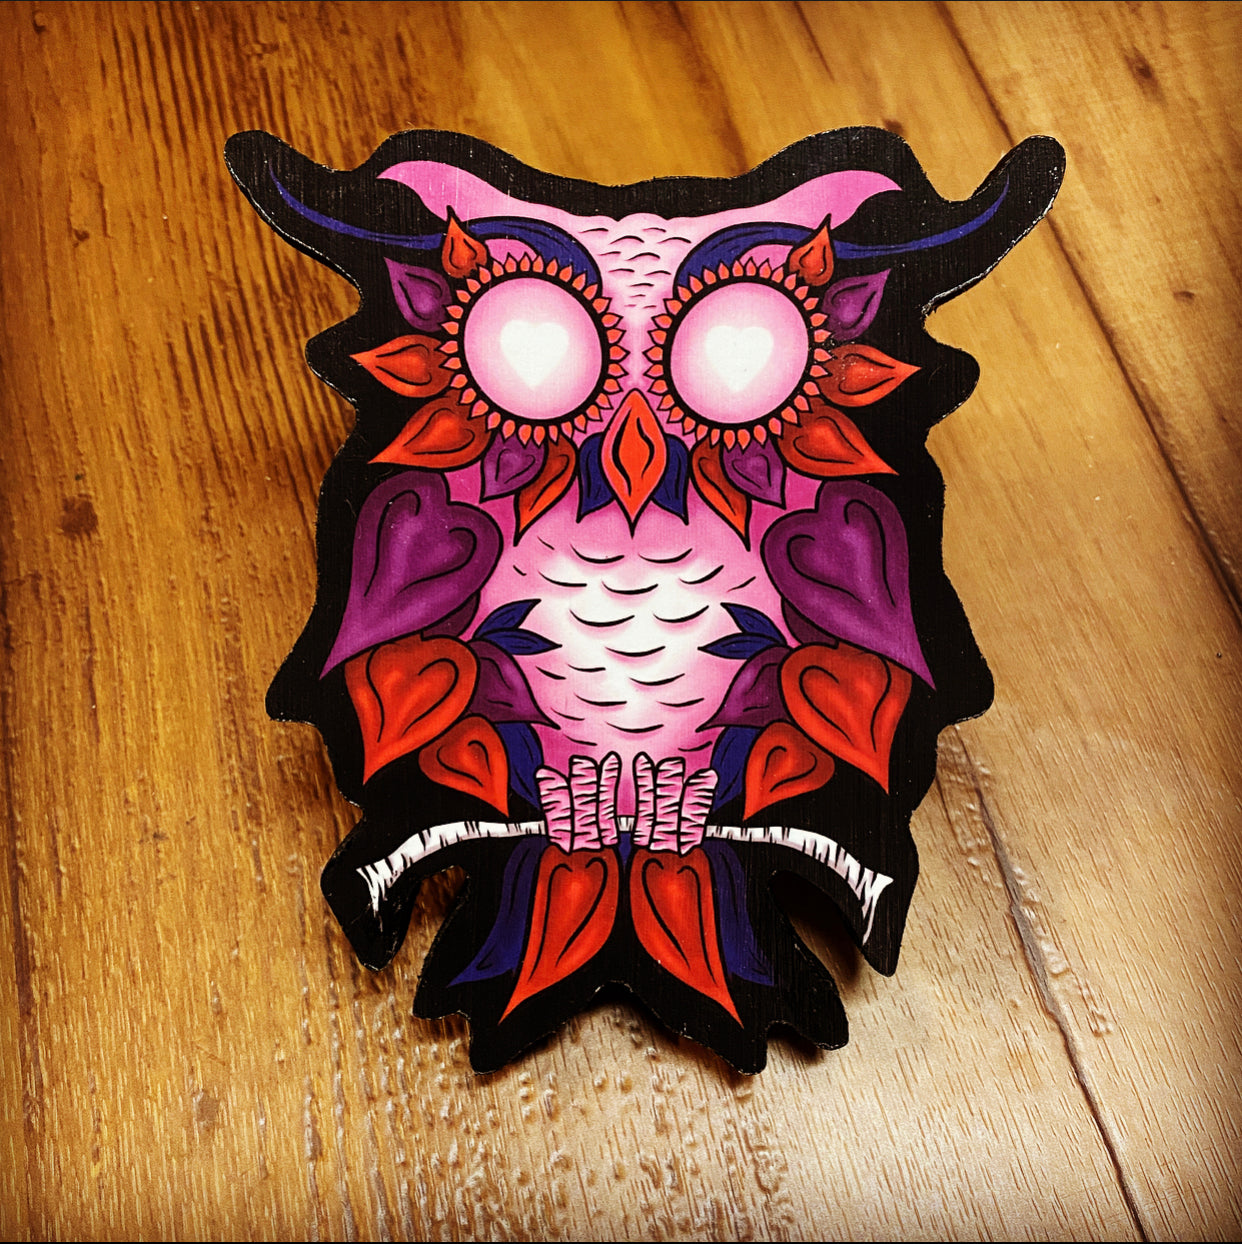 New Heart Owl Print on Wood (Limited Edition) - Daniel Curran Art